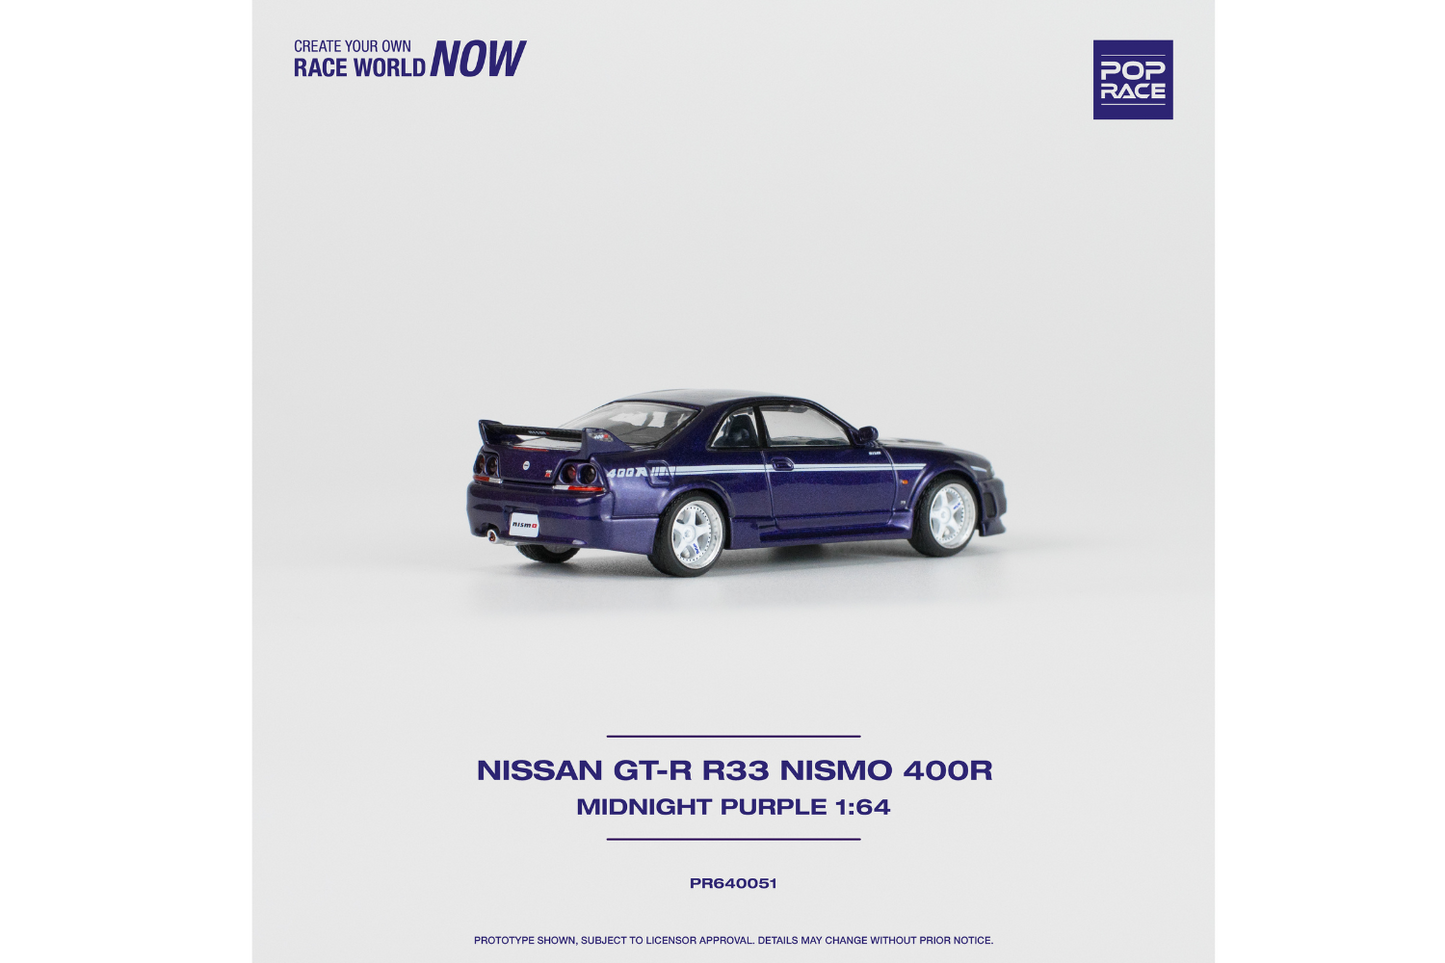 Pop Race 1/64 Nissan Skyline GT-R Nismo 400R (R33) in Midnight Purple